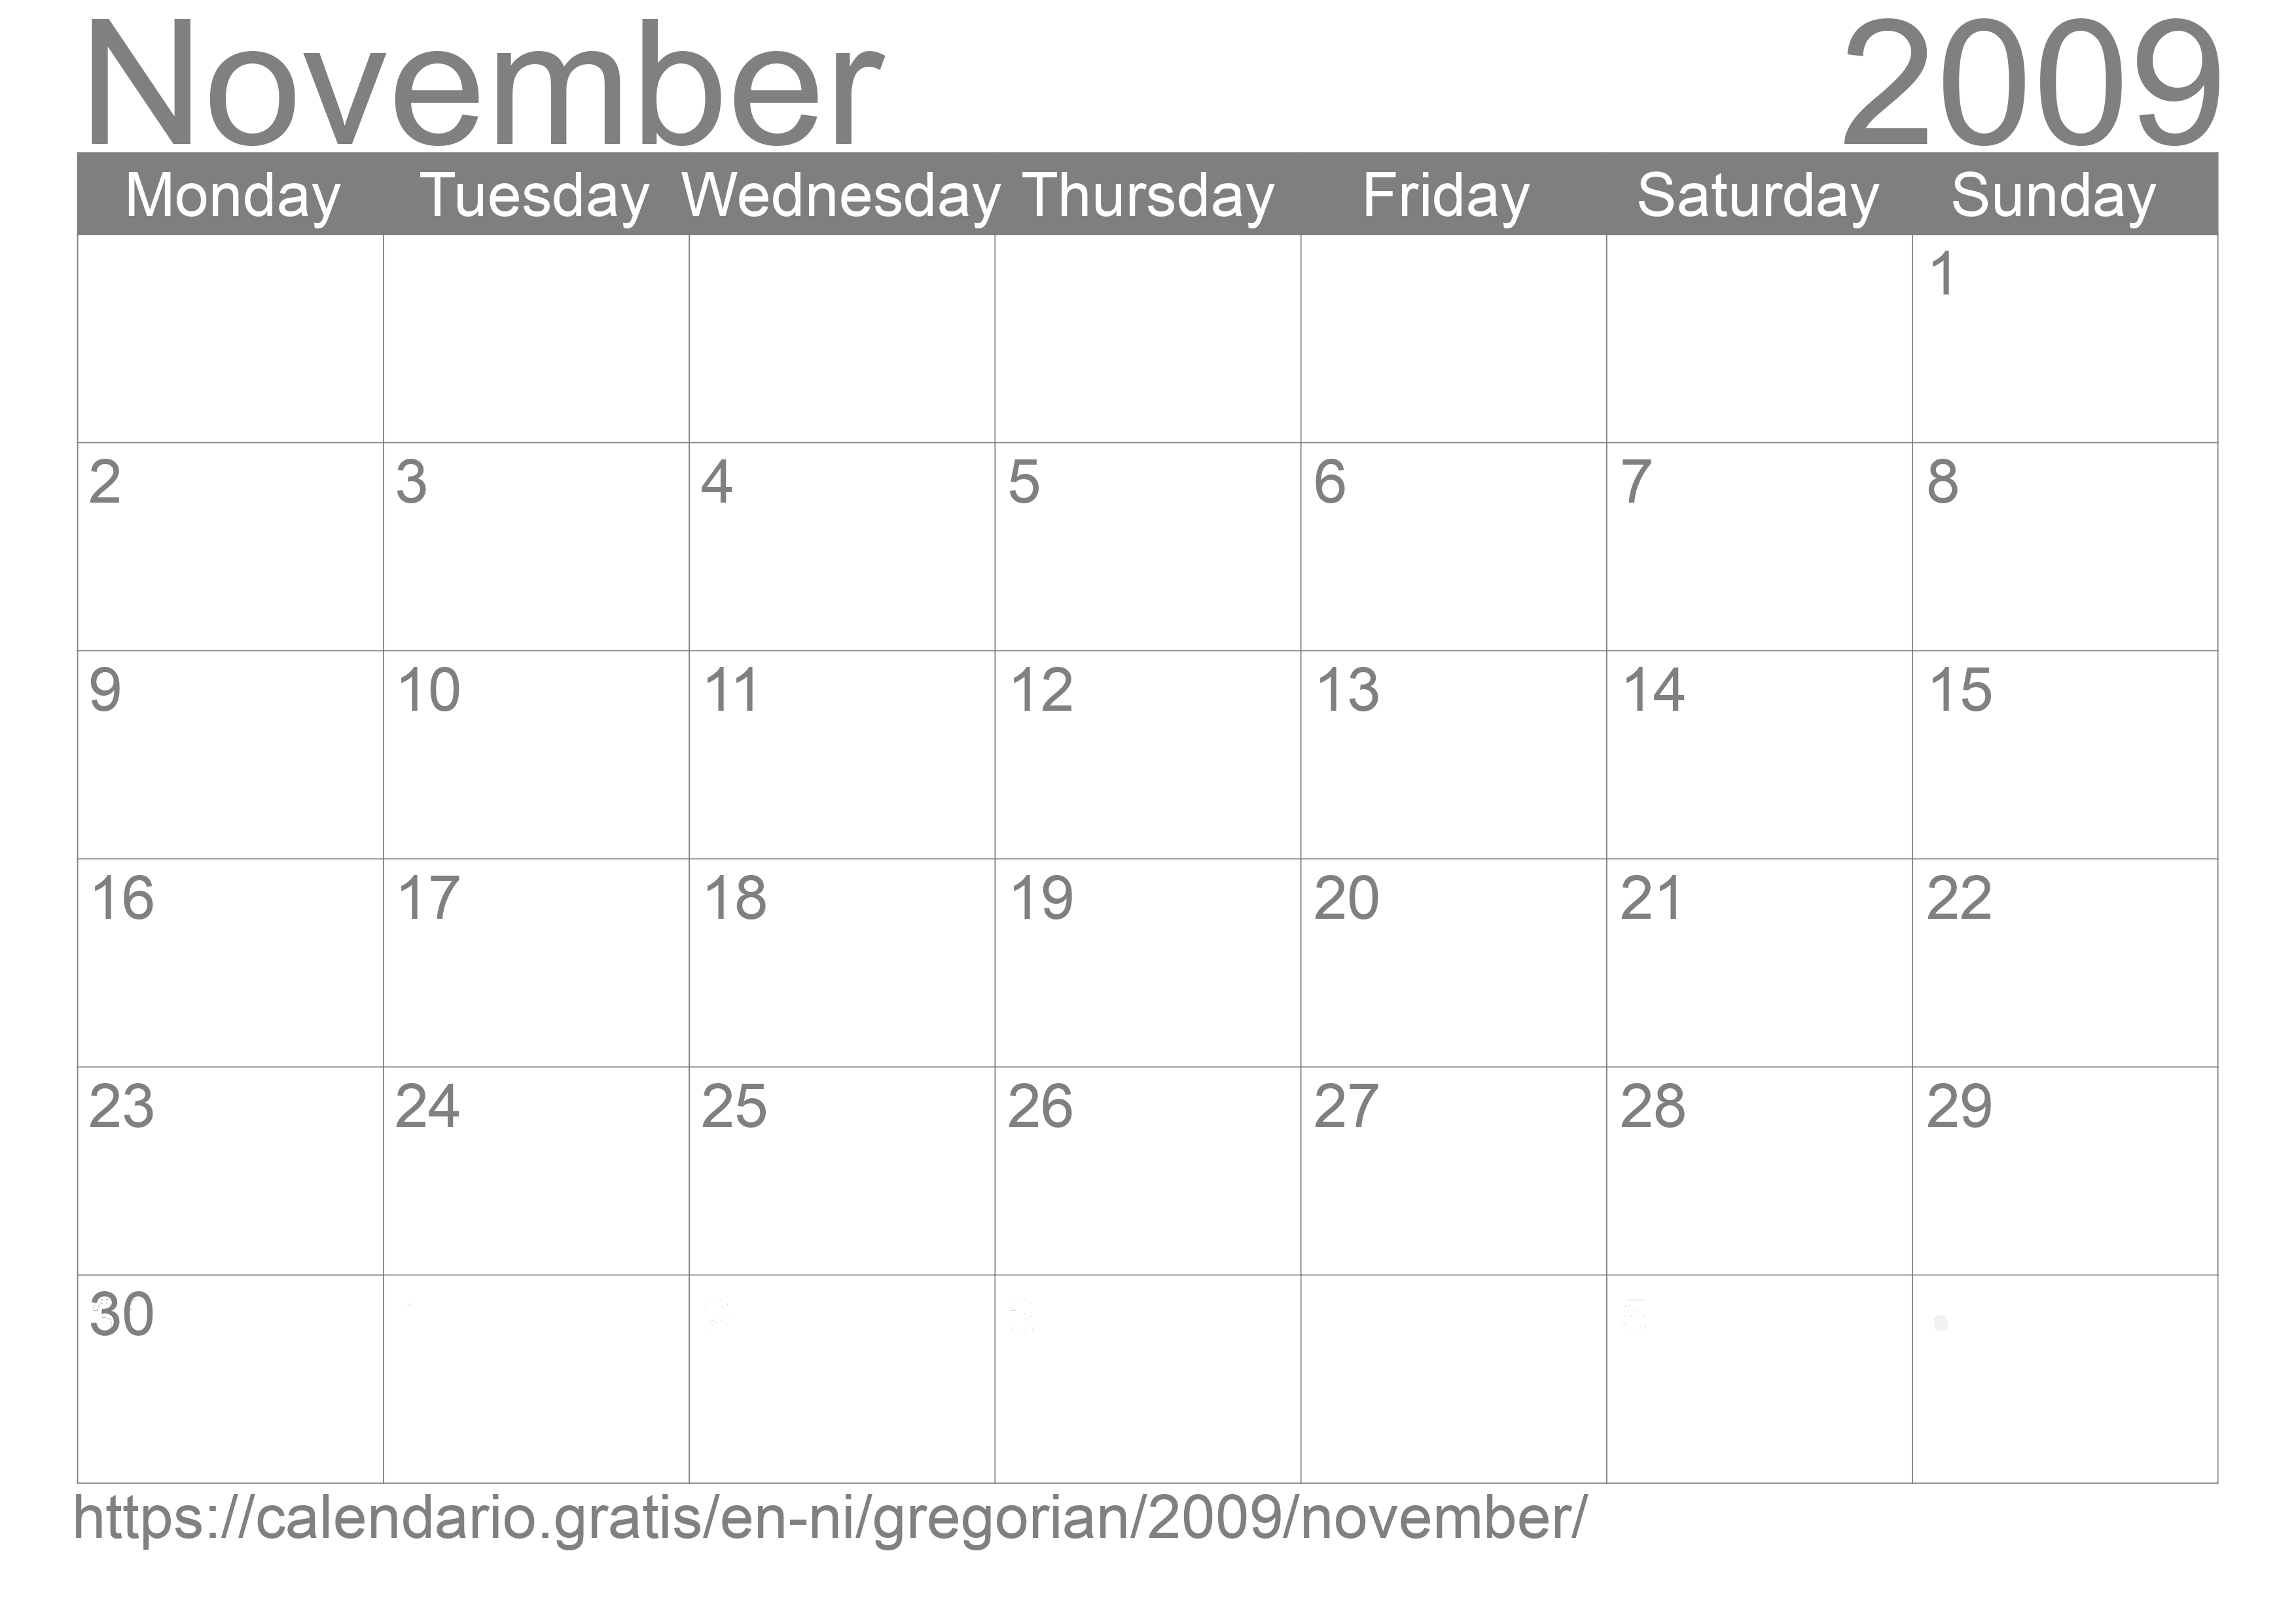 Calendar November 2009 to print